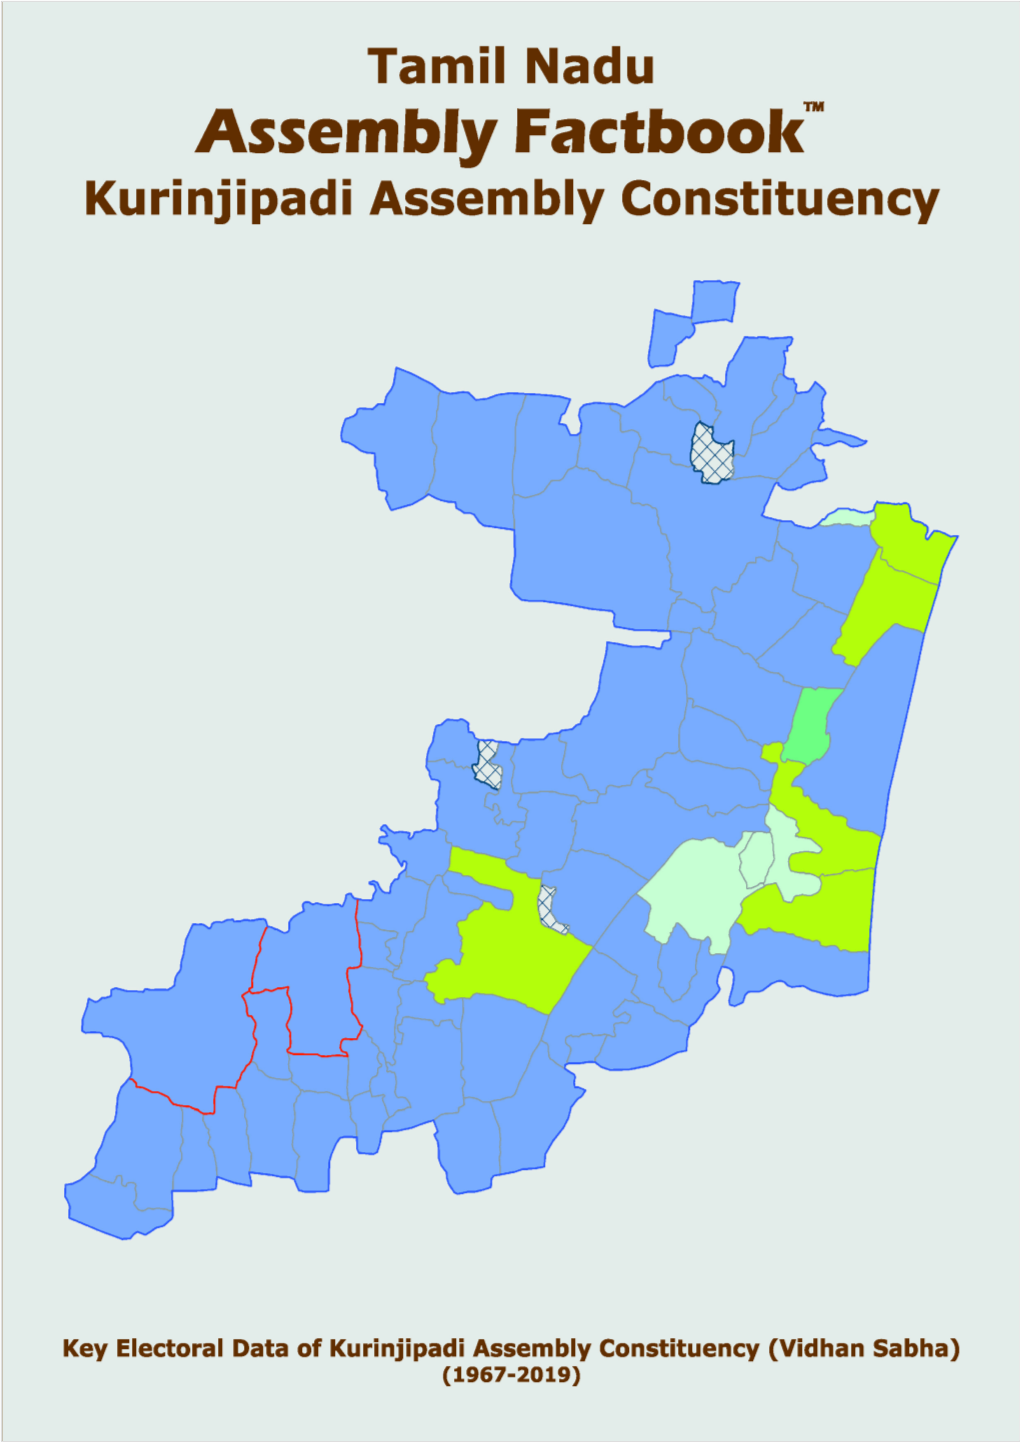 Kurinjipadi Assembly Tamil Nadu Factbook